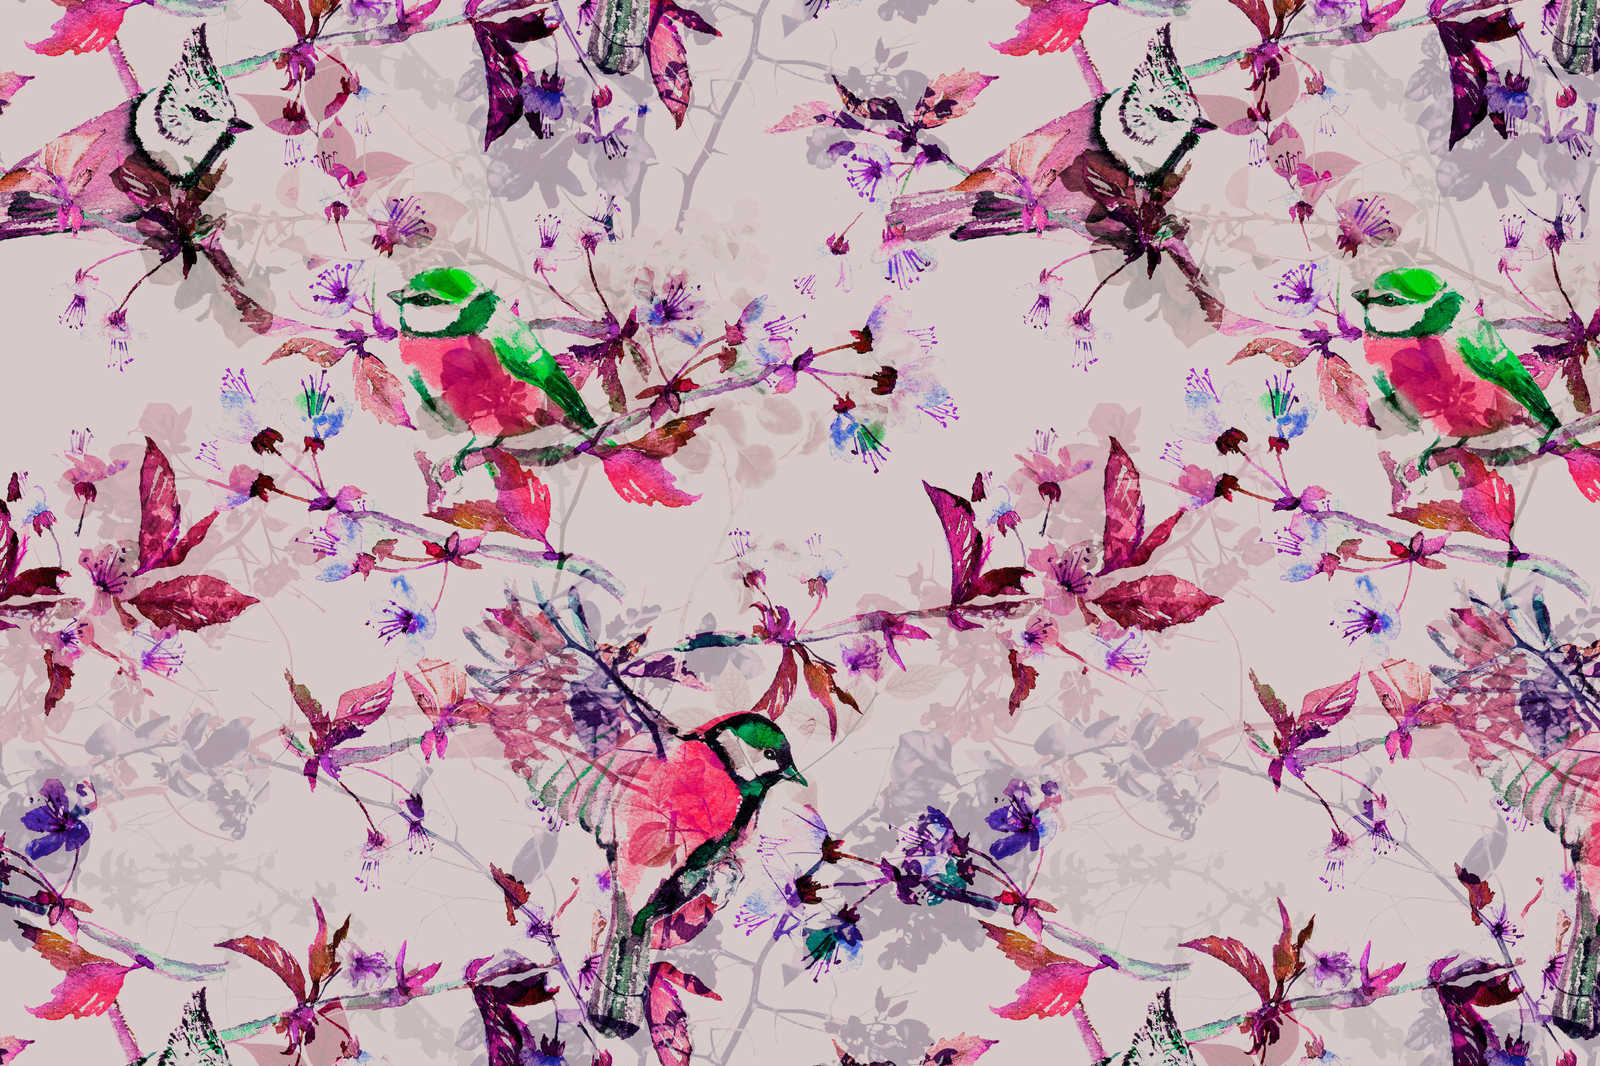             Vogels Collage Stijl Canvas Schilderij | roze, blauw - 0.90 m x 0.60 m
        